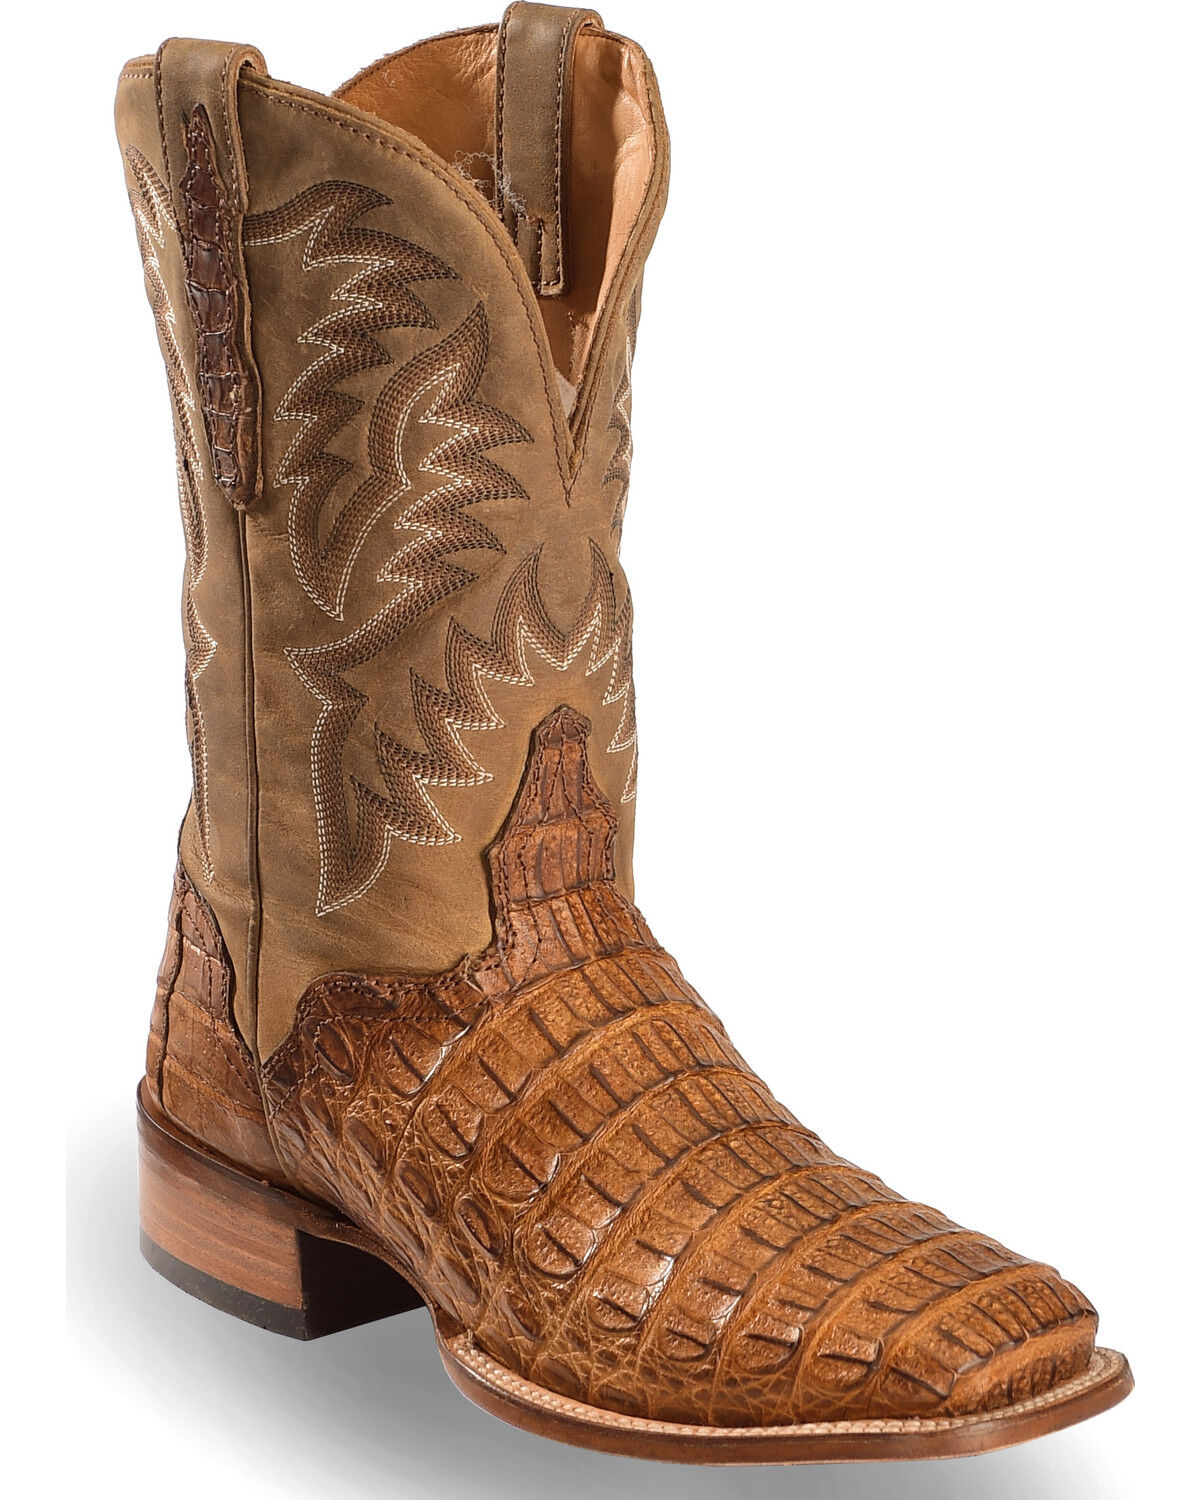 El Dorado Handmade Cowboy Boots - Sheplers